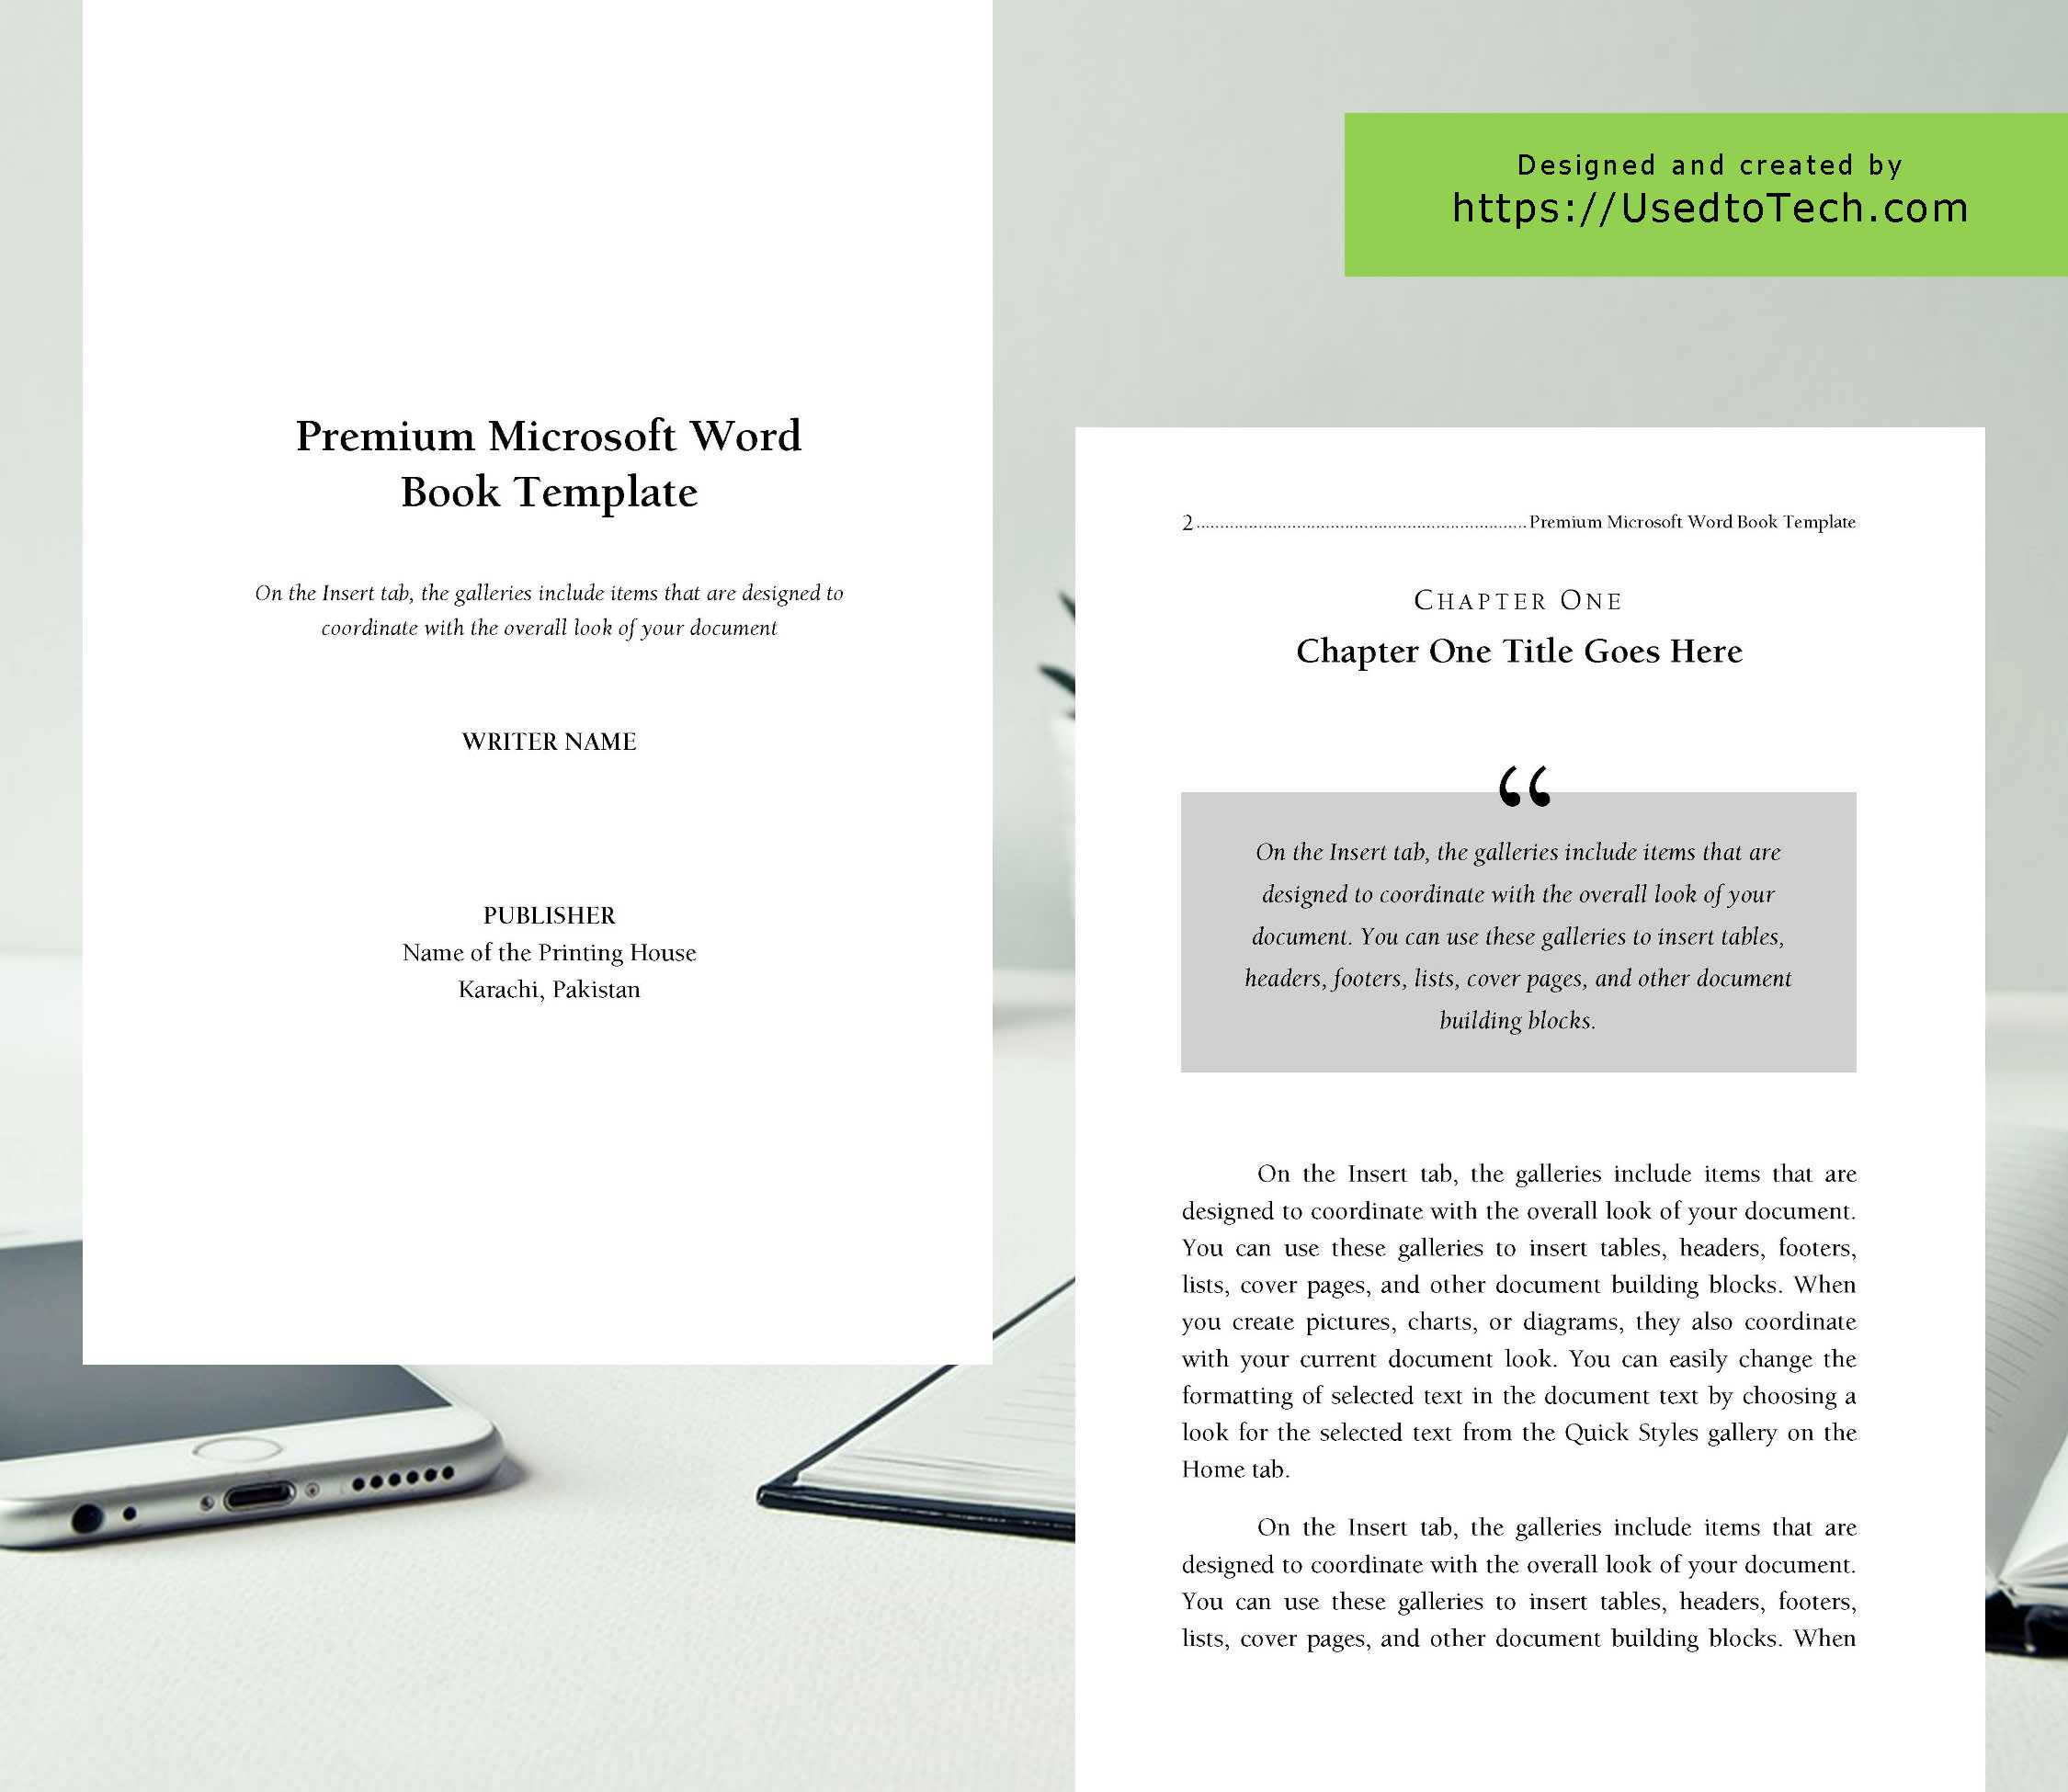 Premium & Free 6 X 9 Book Template For Microsoft Word - Used Intended For 6X9 Book Template For Word